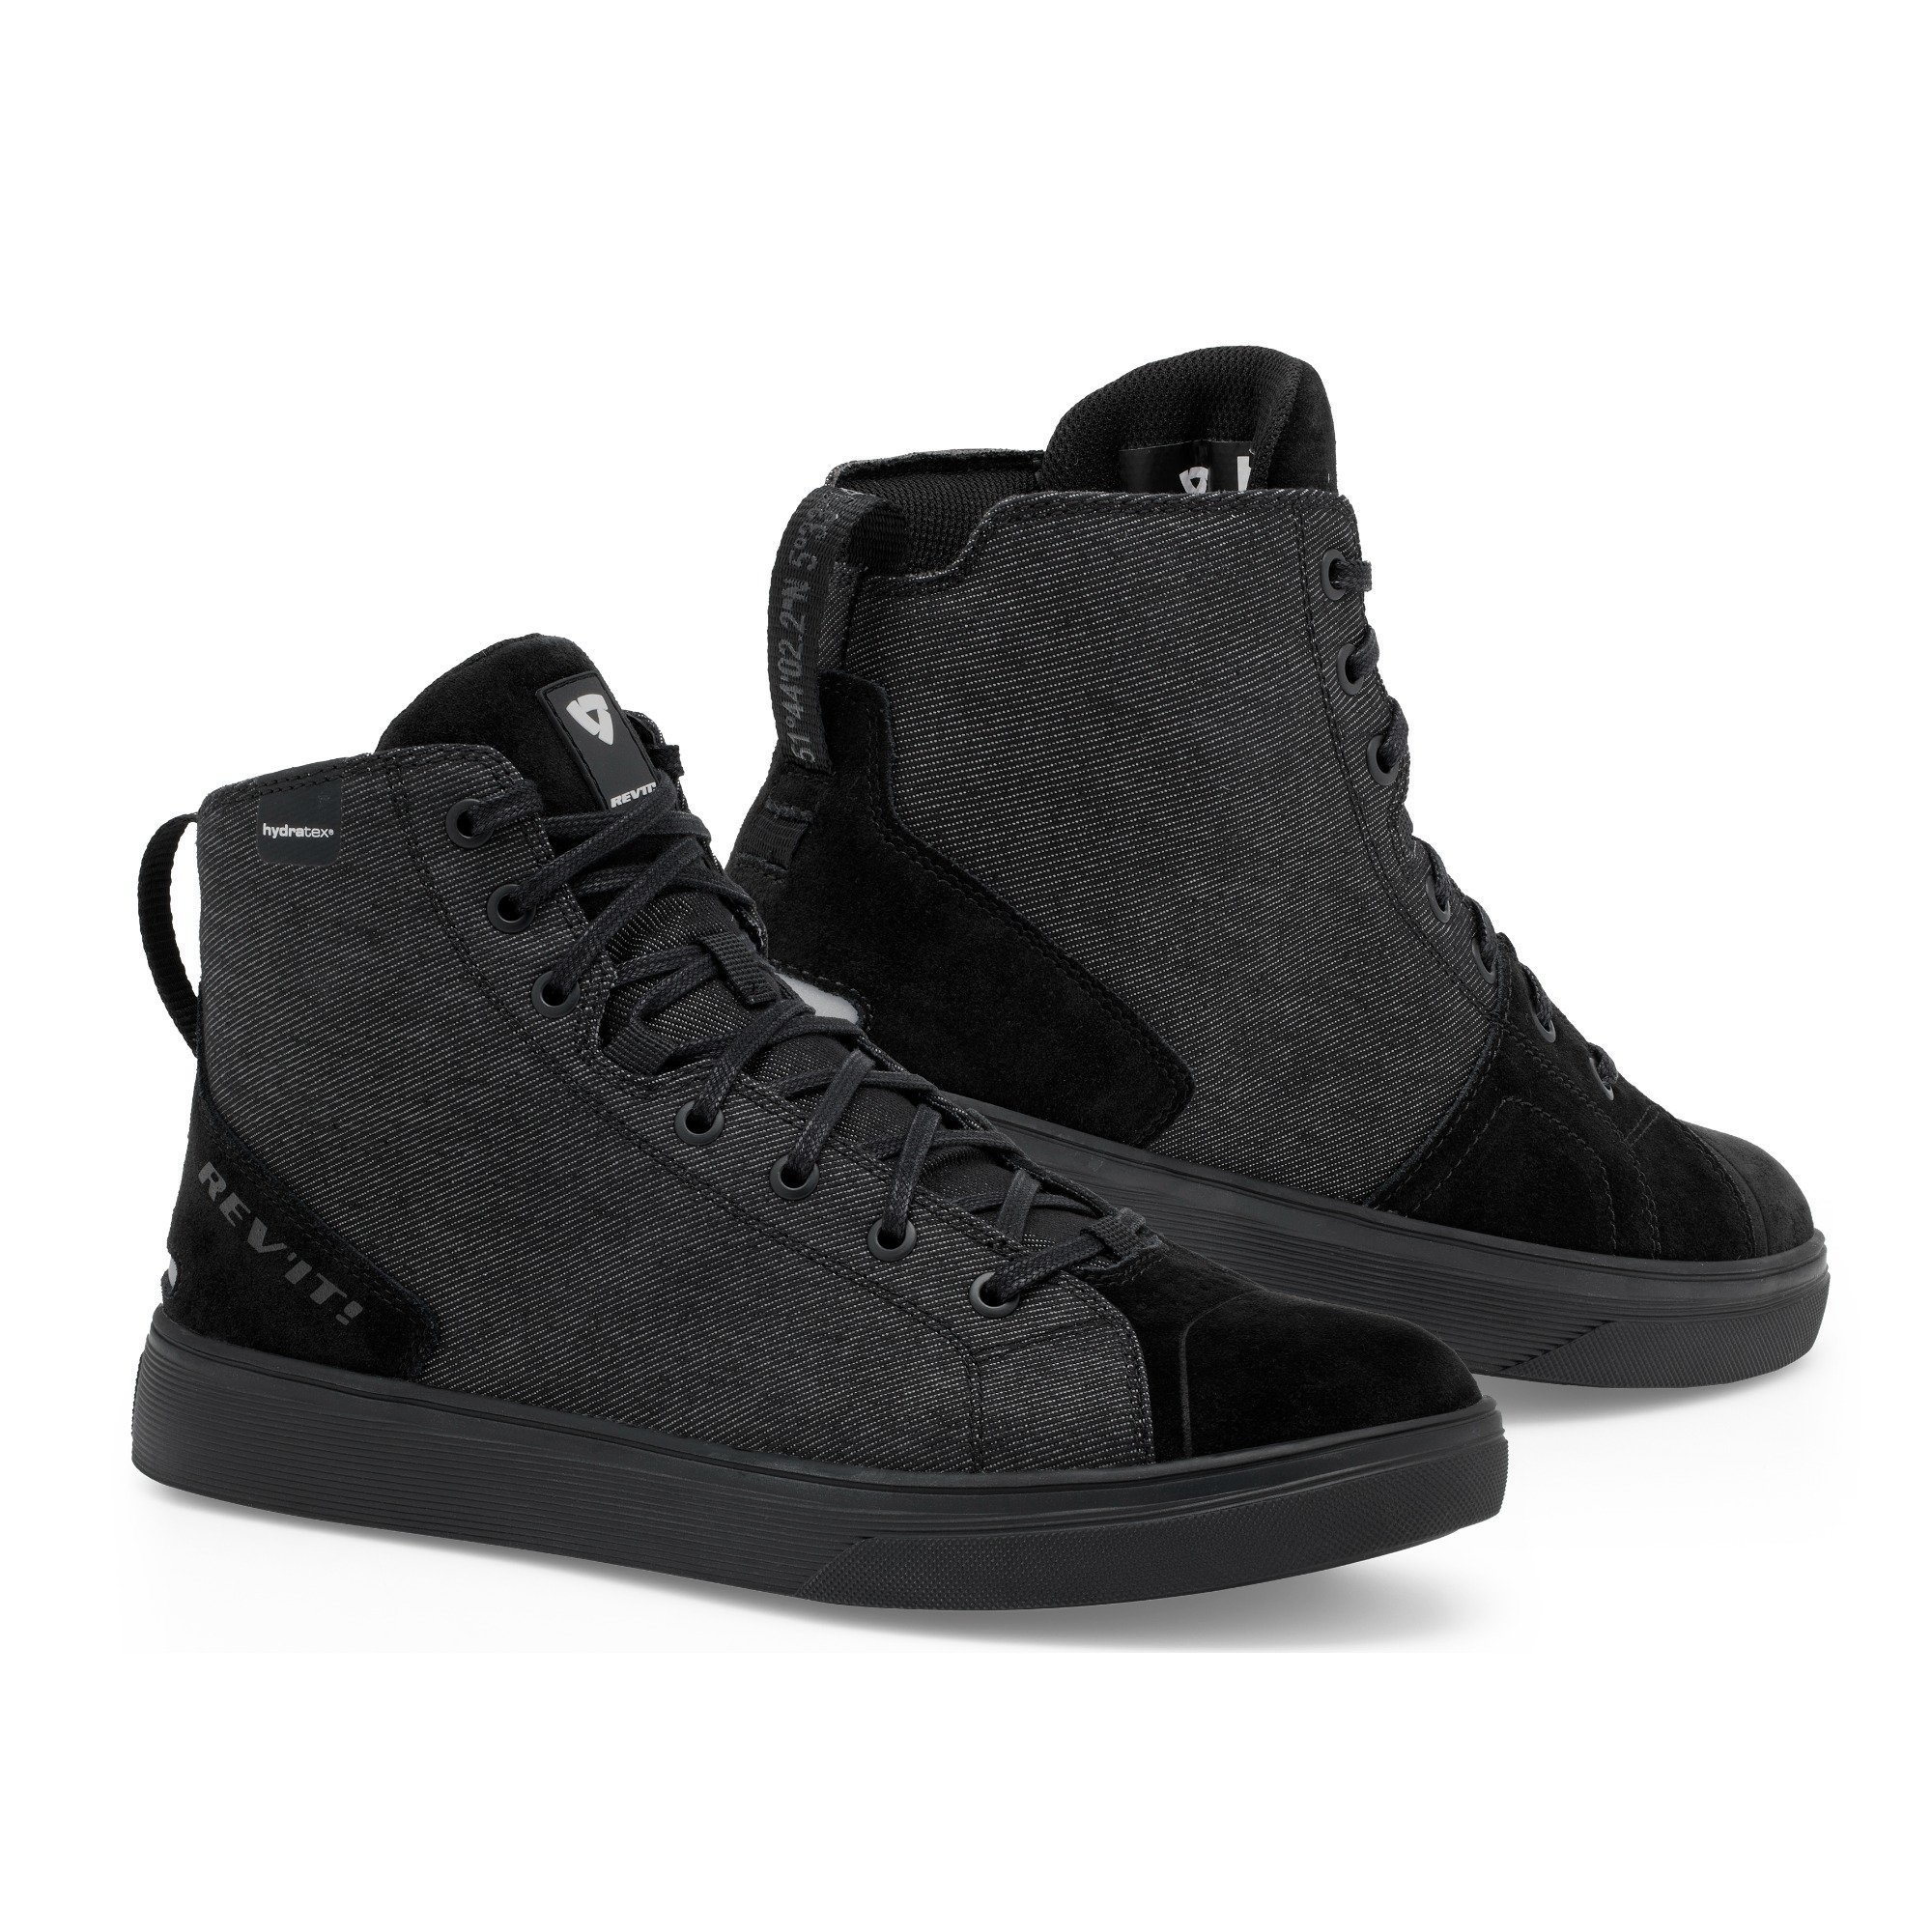 Image of REV'IT! Delta H2O Shoes Black Size 41 EN